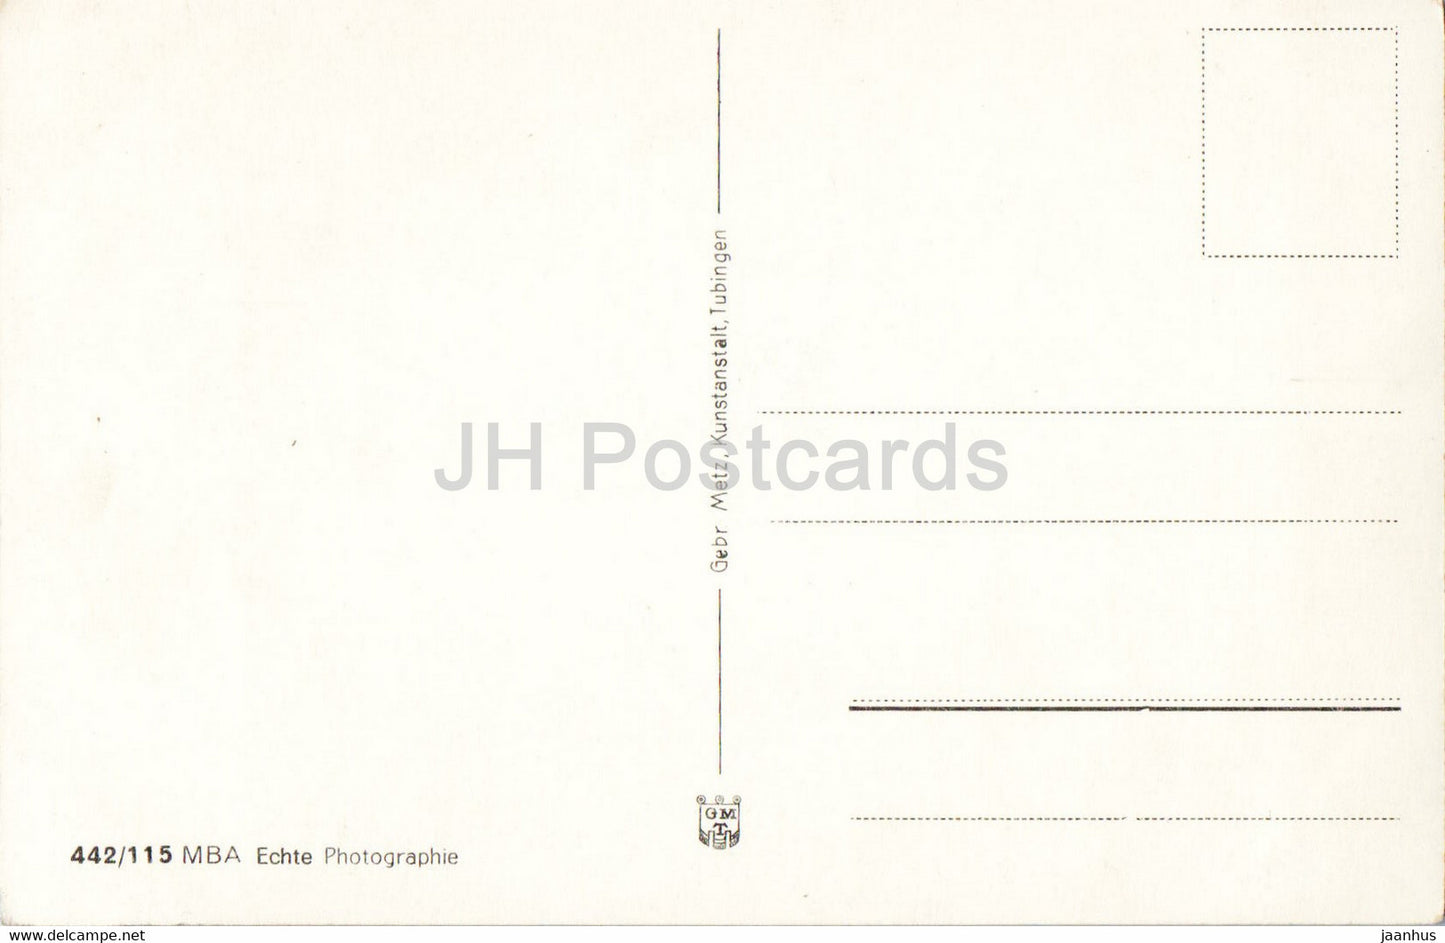 Burg Hohenzollern 855 m - carte postale ancienne - Allemagne - inutilisée